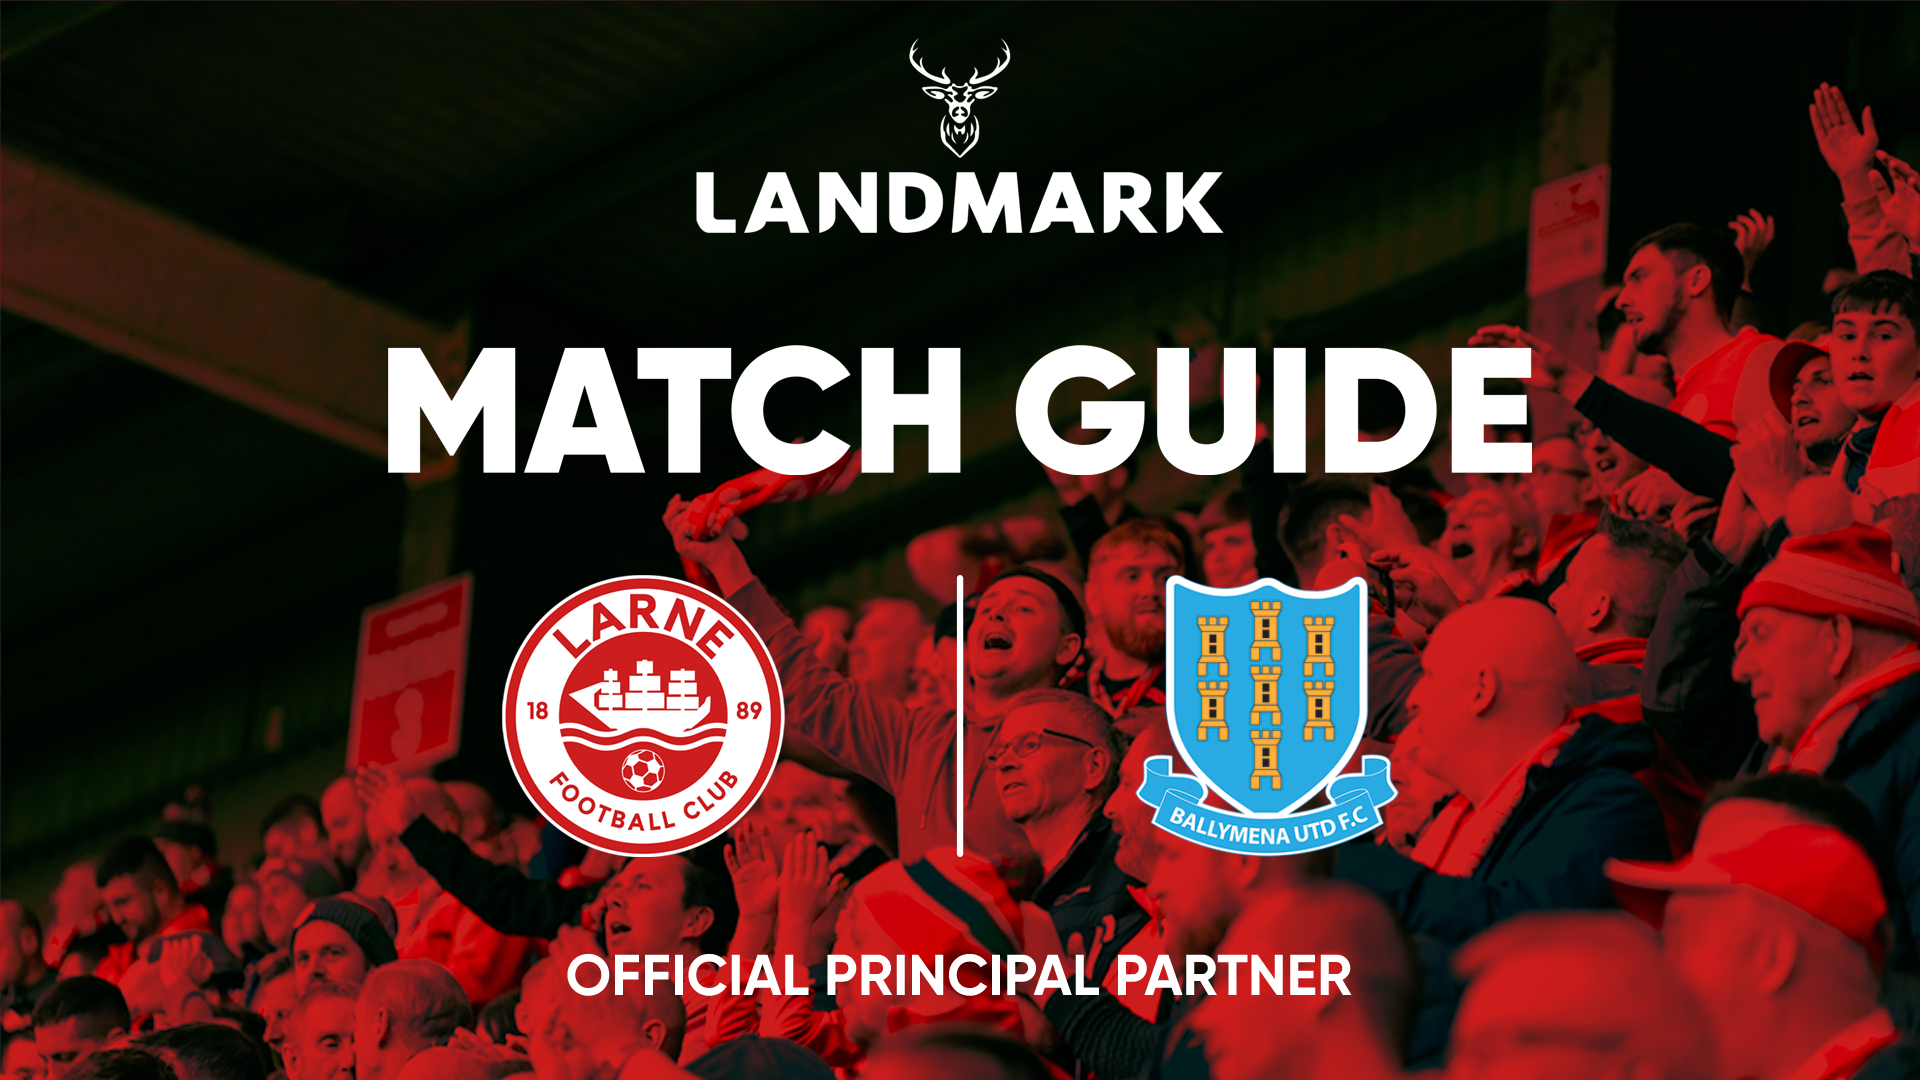 Landmark Match Guide